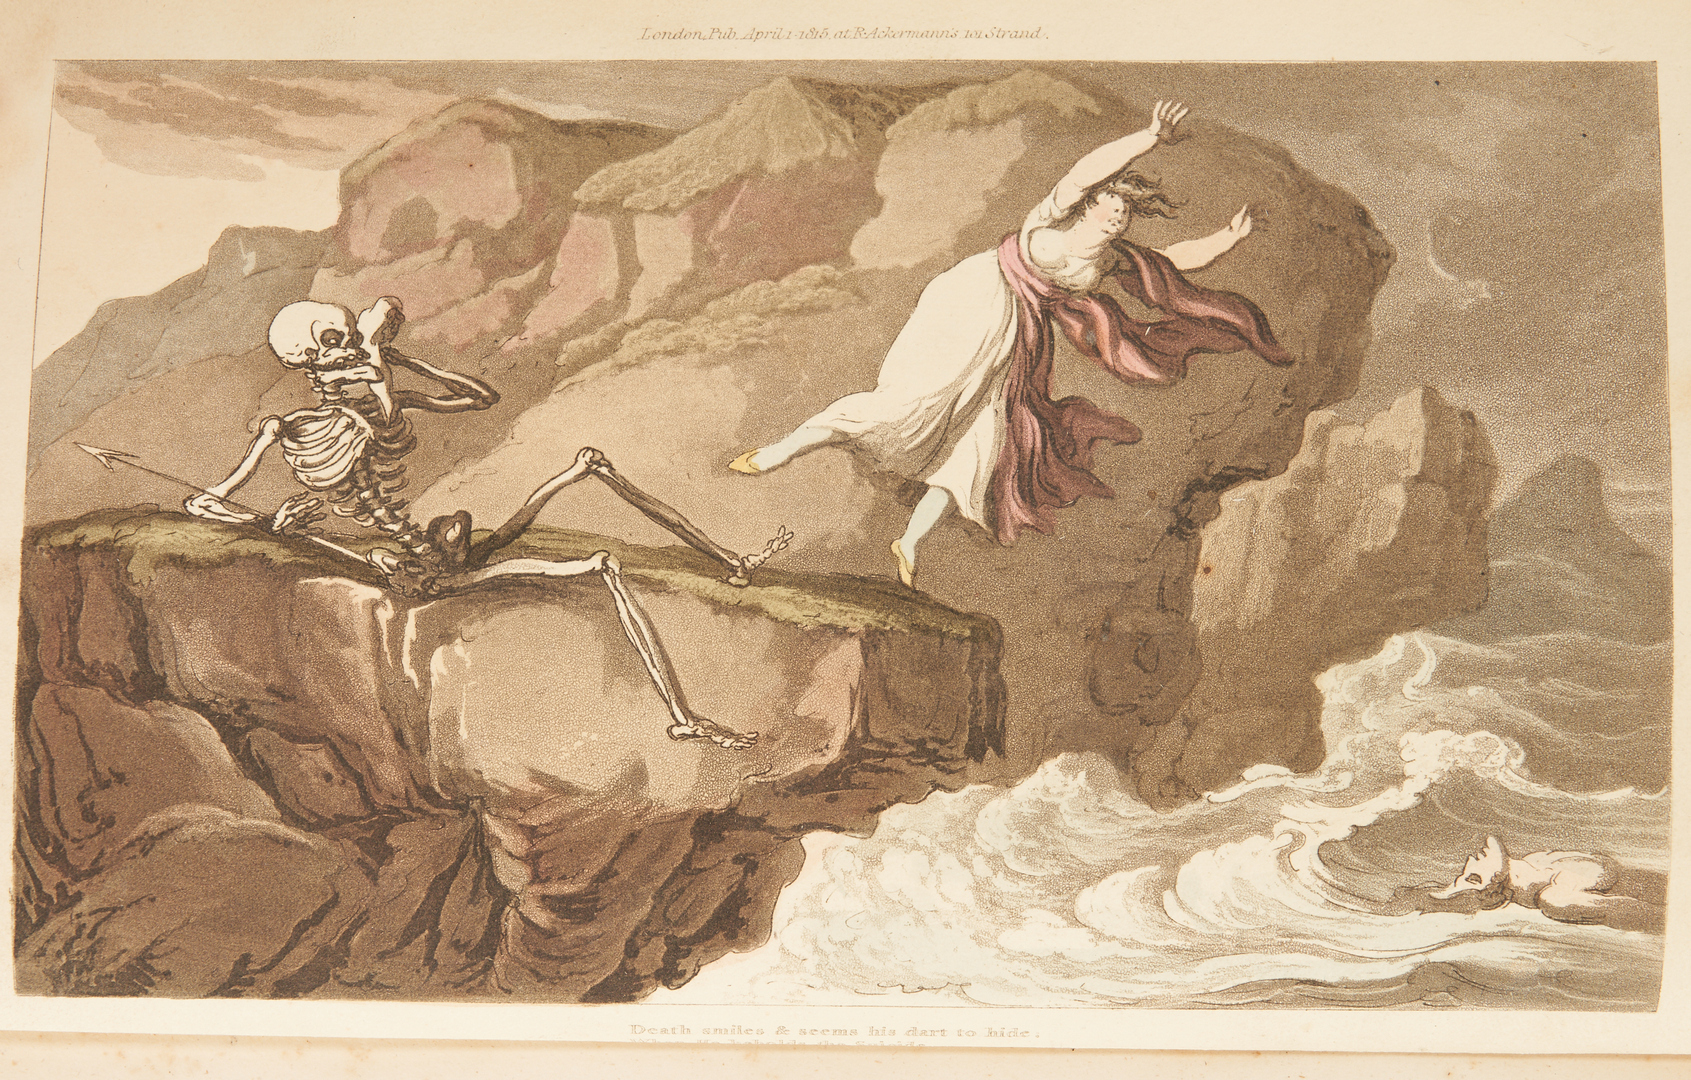 Lot 378: Combe, ENGLISH DANCE OF DEATH, Vol. I-II, 1815-16